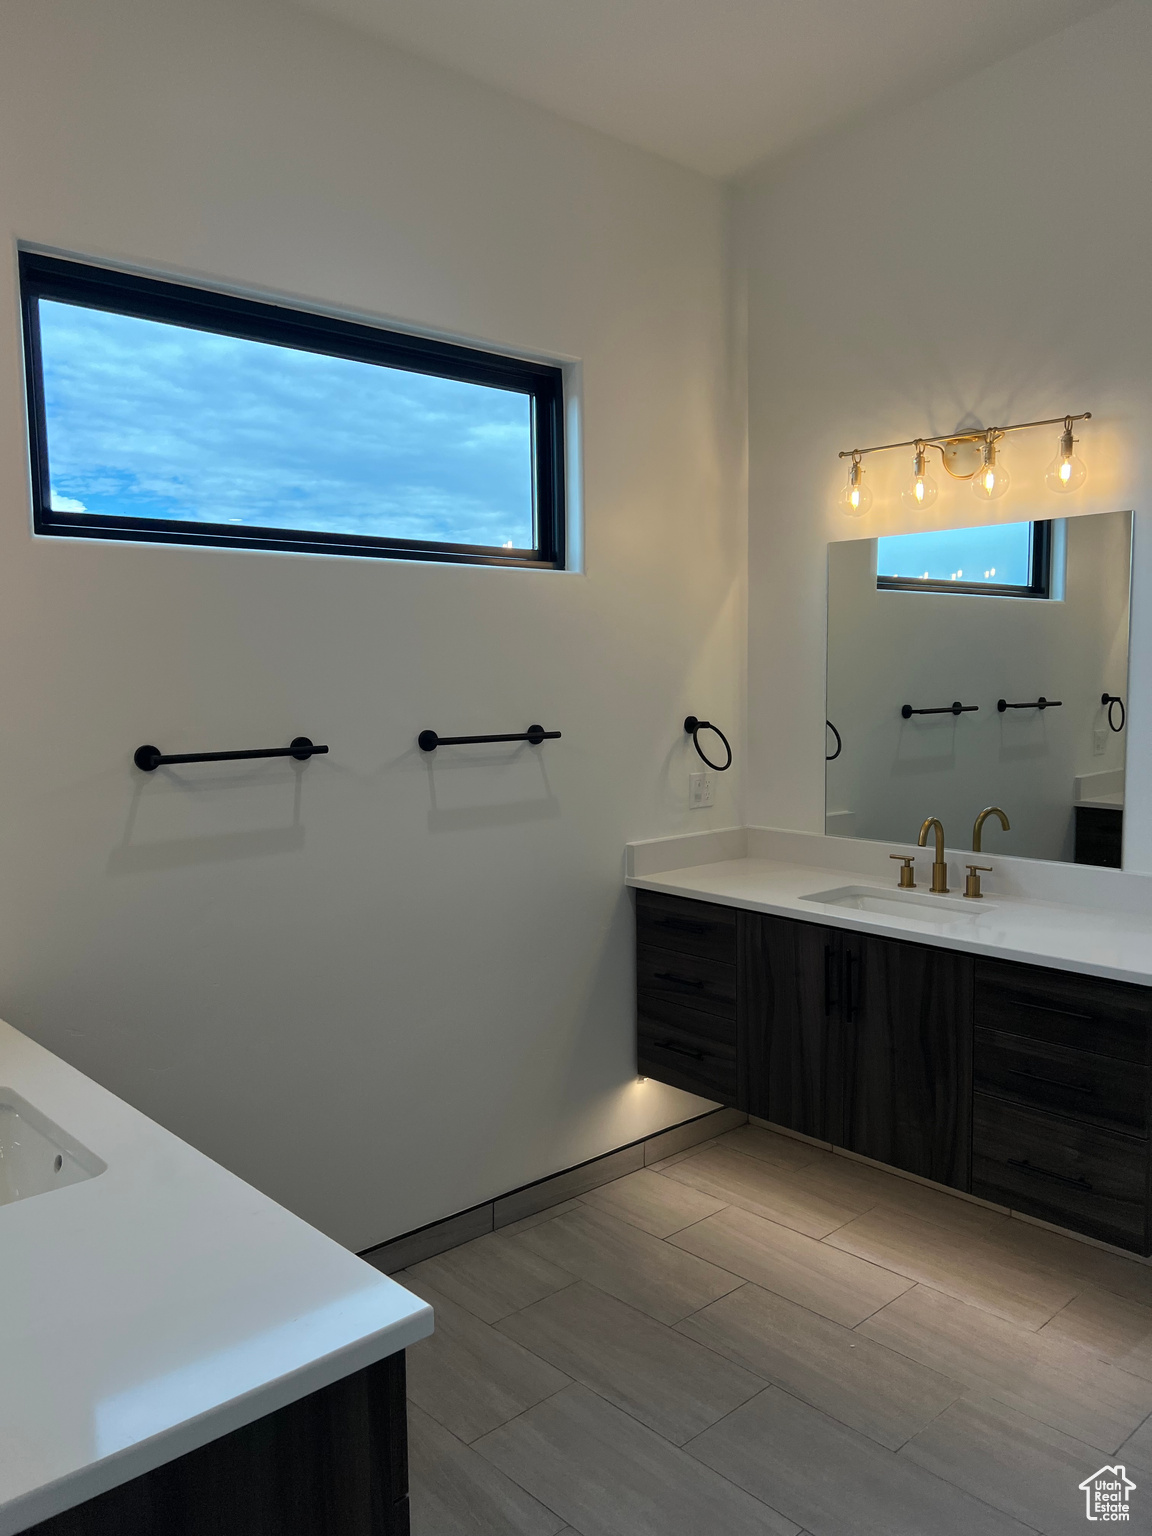 Bathroom featuring vanity, plenty of natural light, and tile flooring